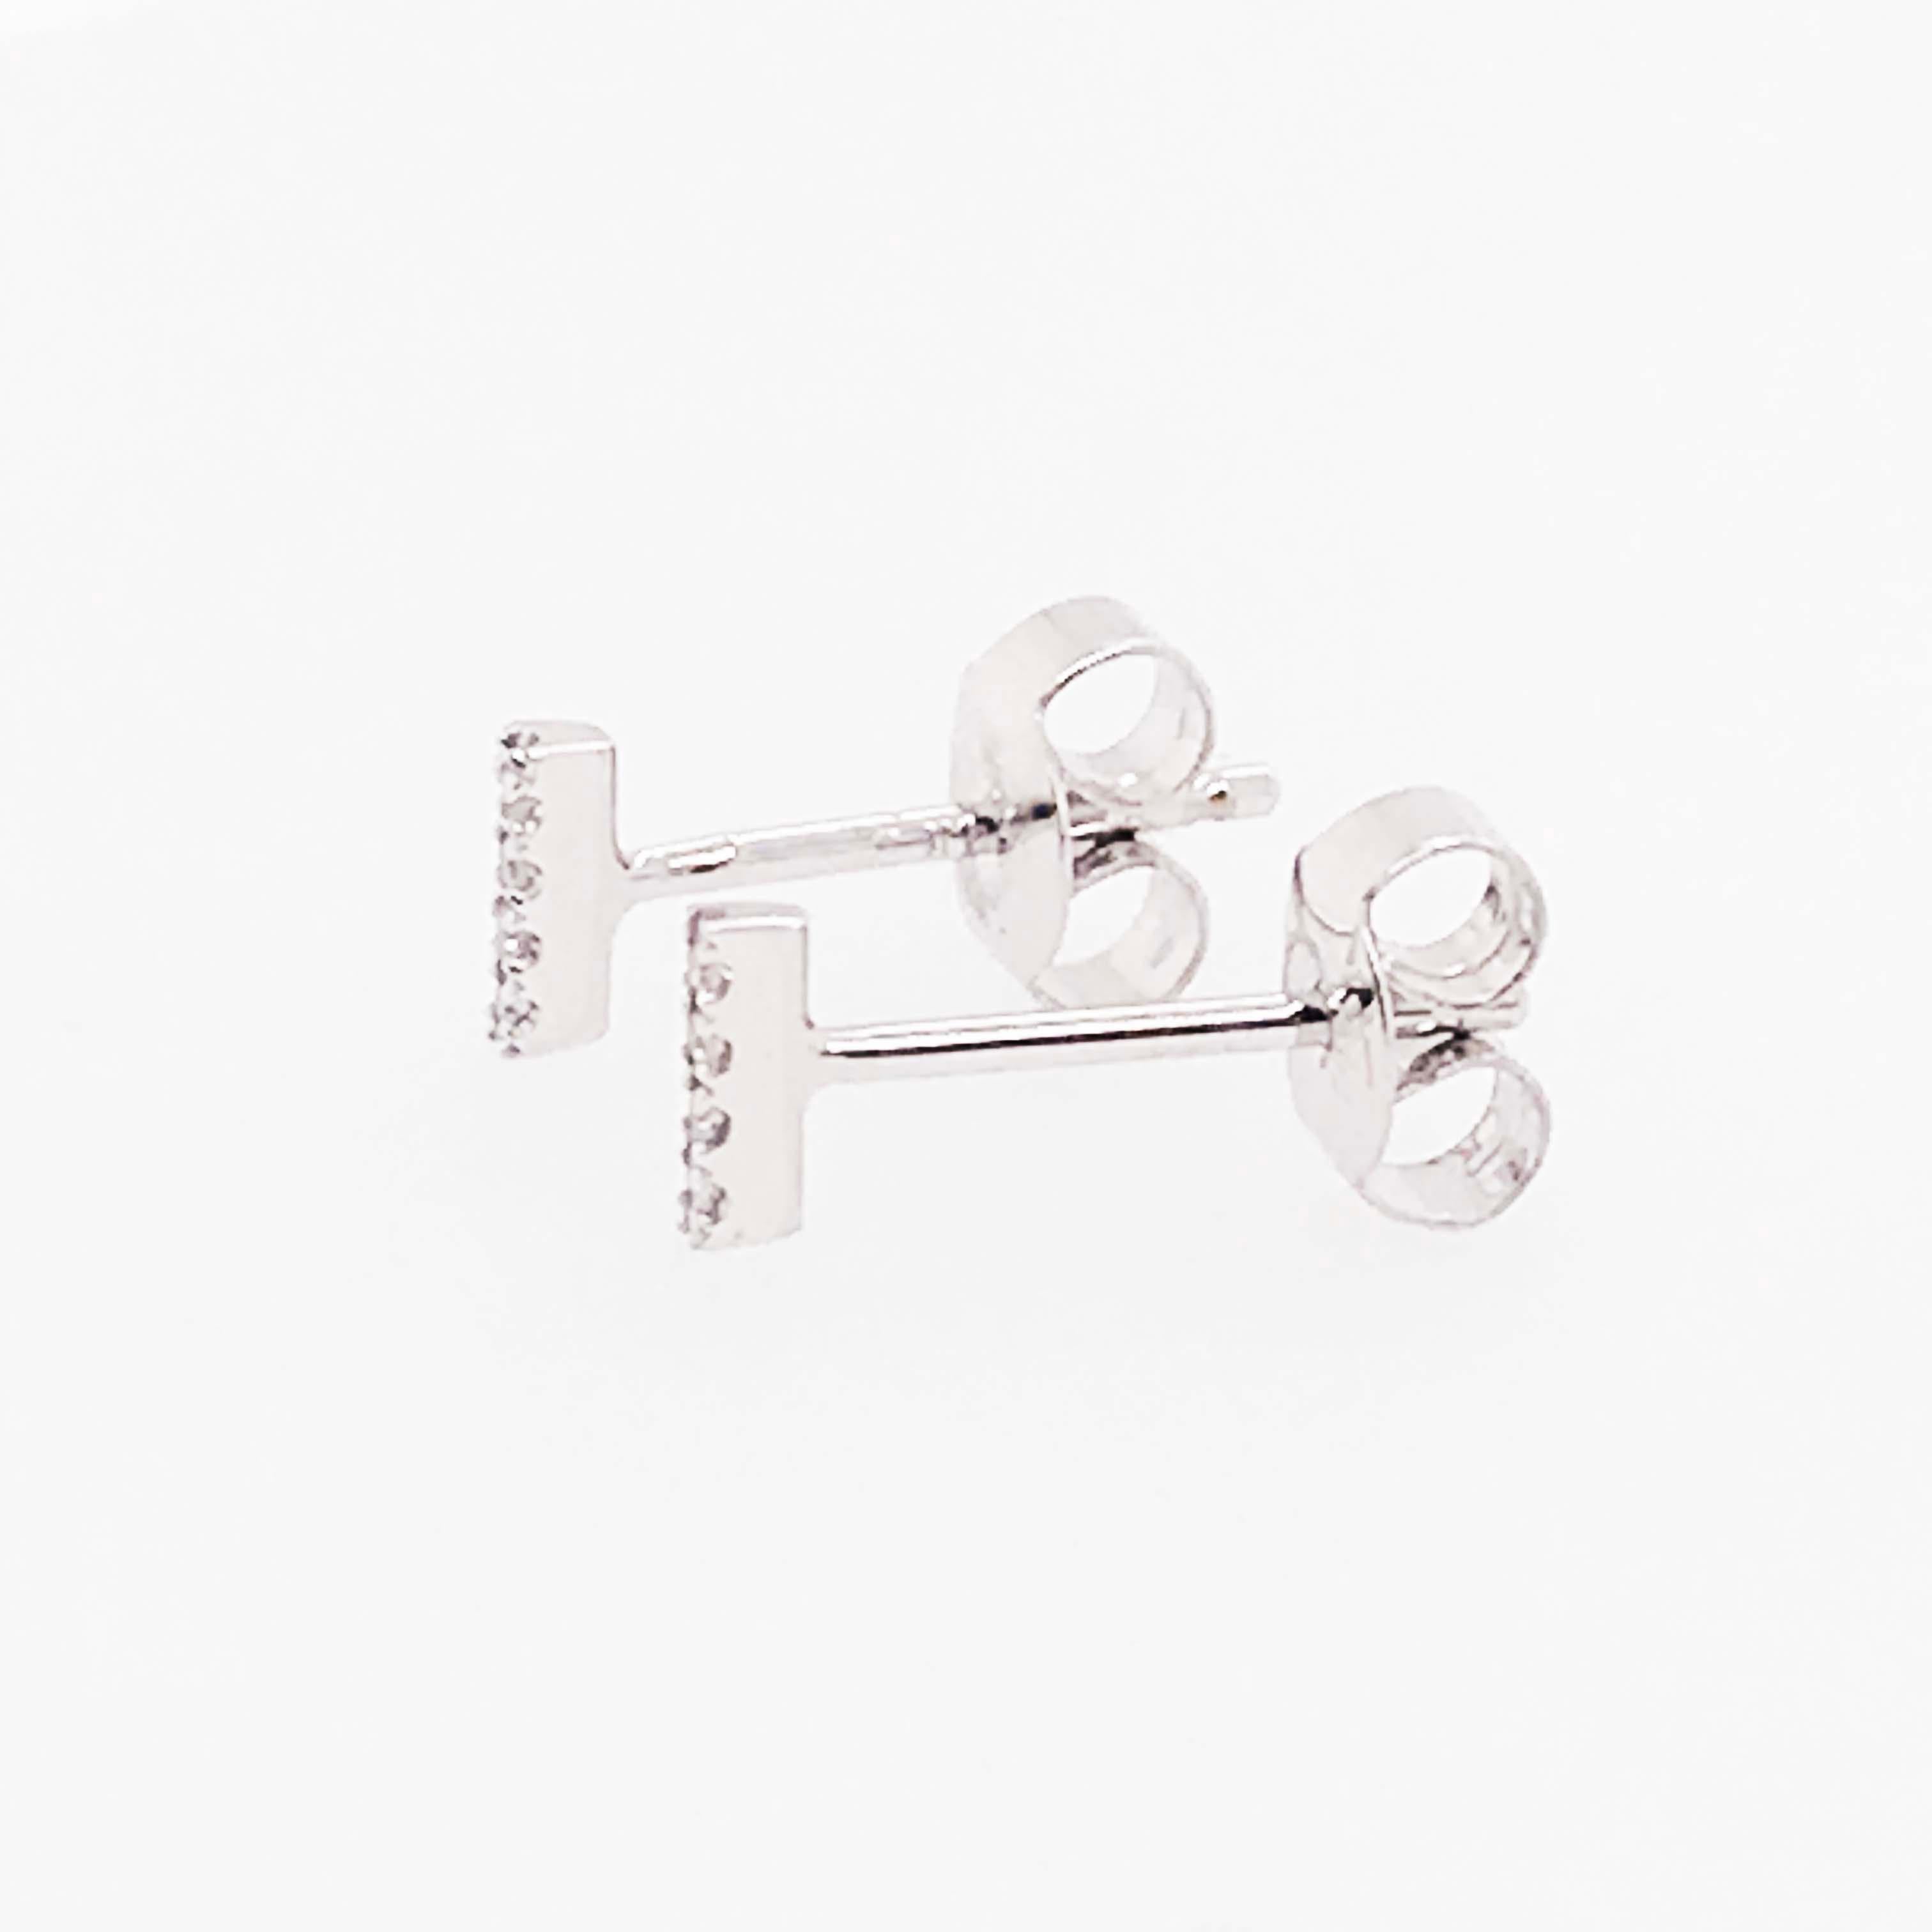 Round Cut Diamond Bar Earring Studs, Pave Diamond Line Stud Earrings in White Gold